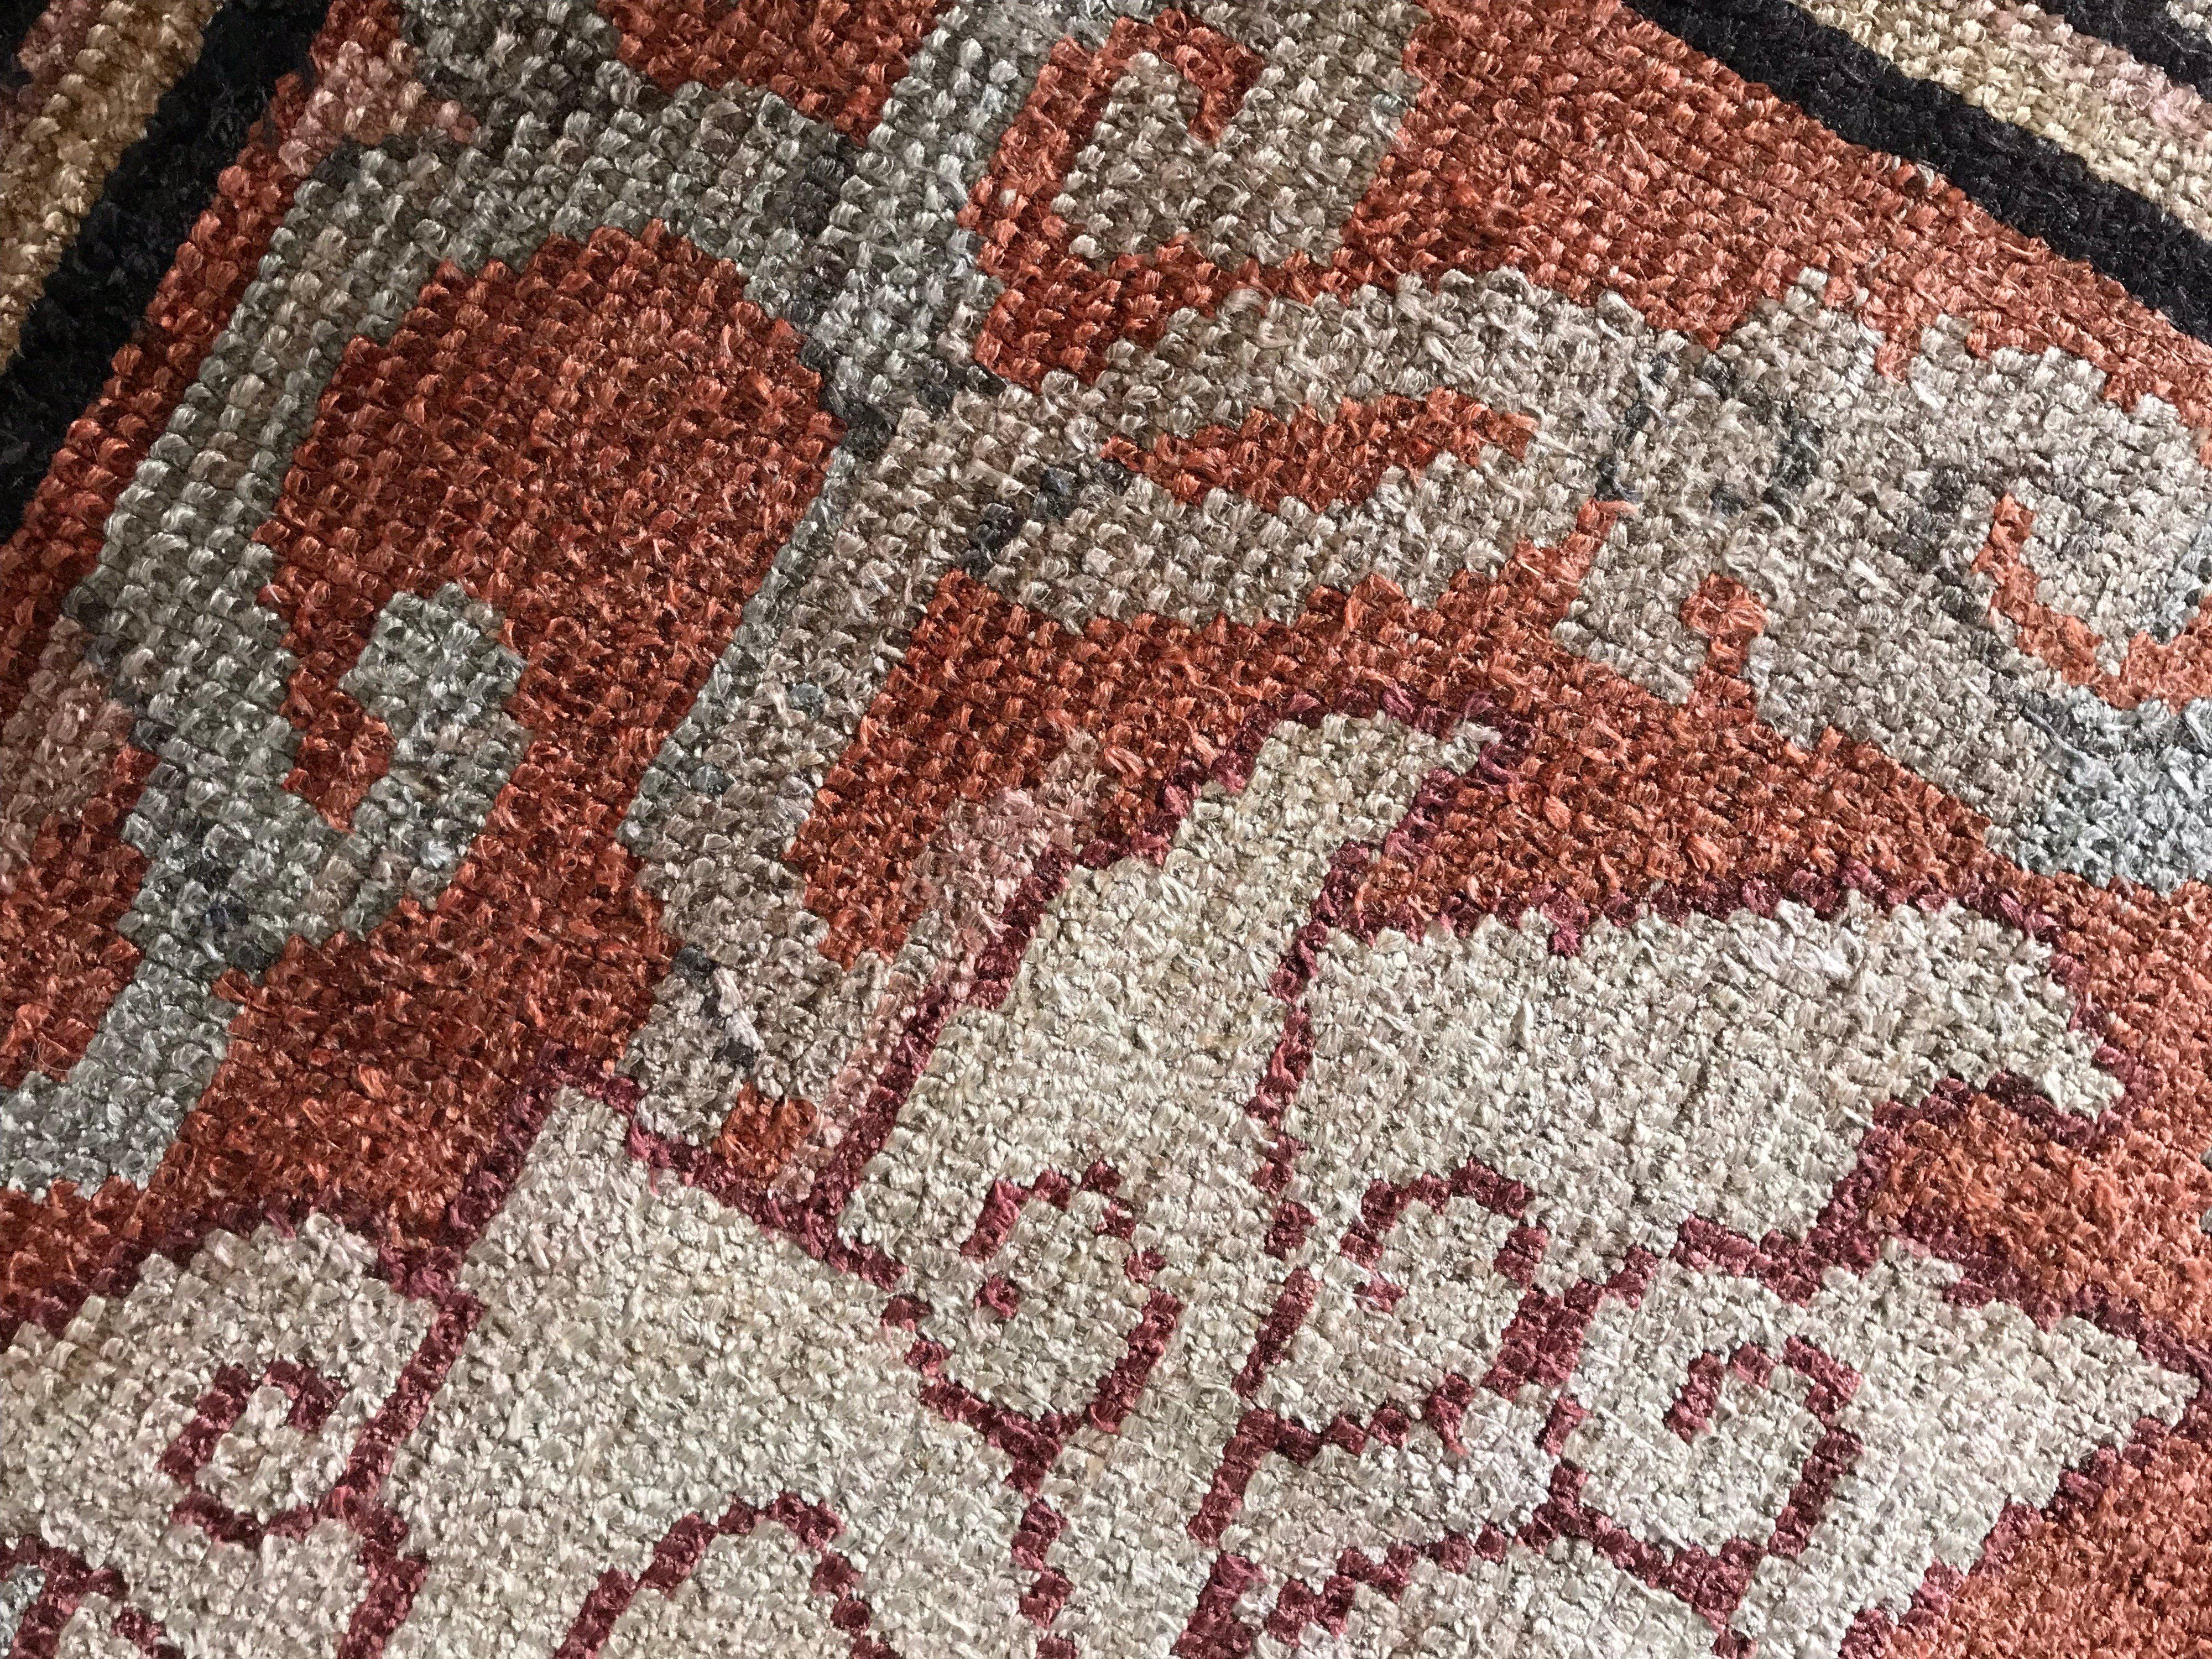 Early 20th century Chinese orange, ivory and gray handmade silk rug
Size: 7'6